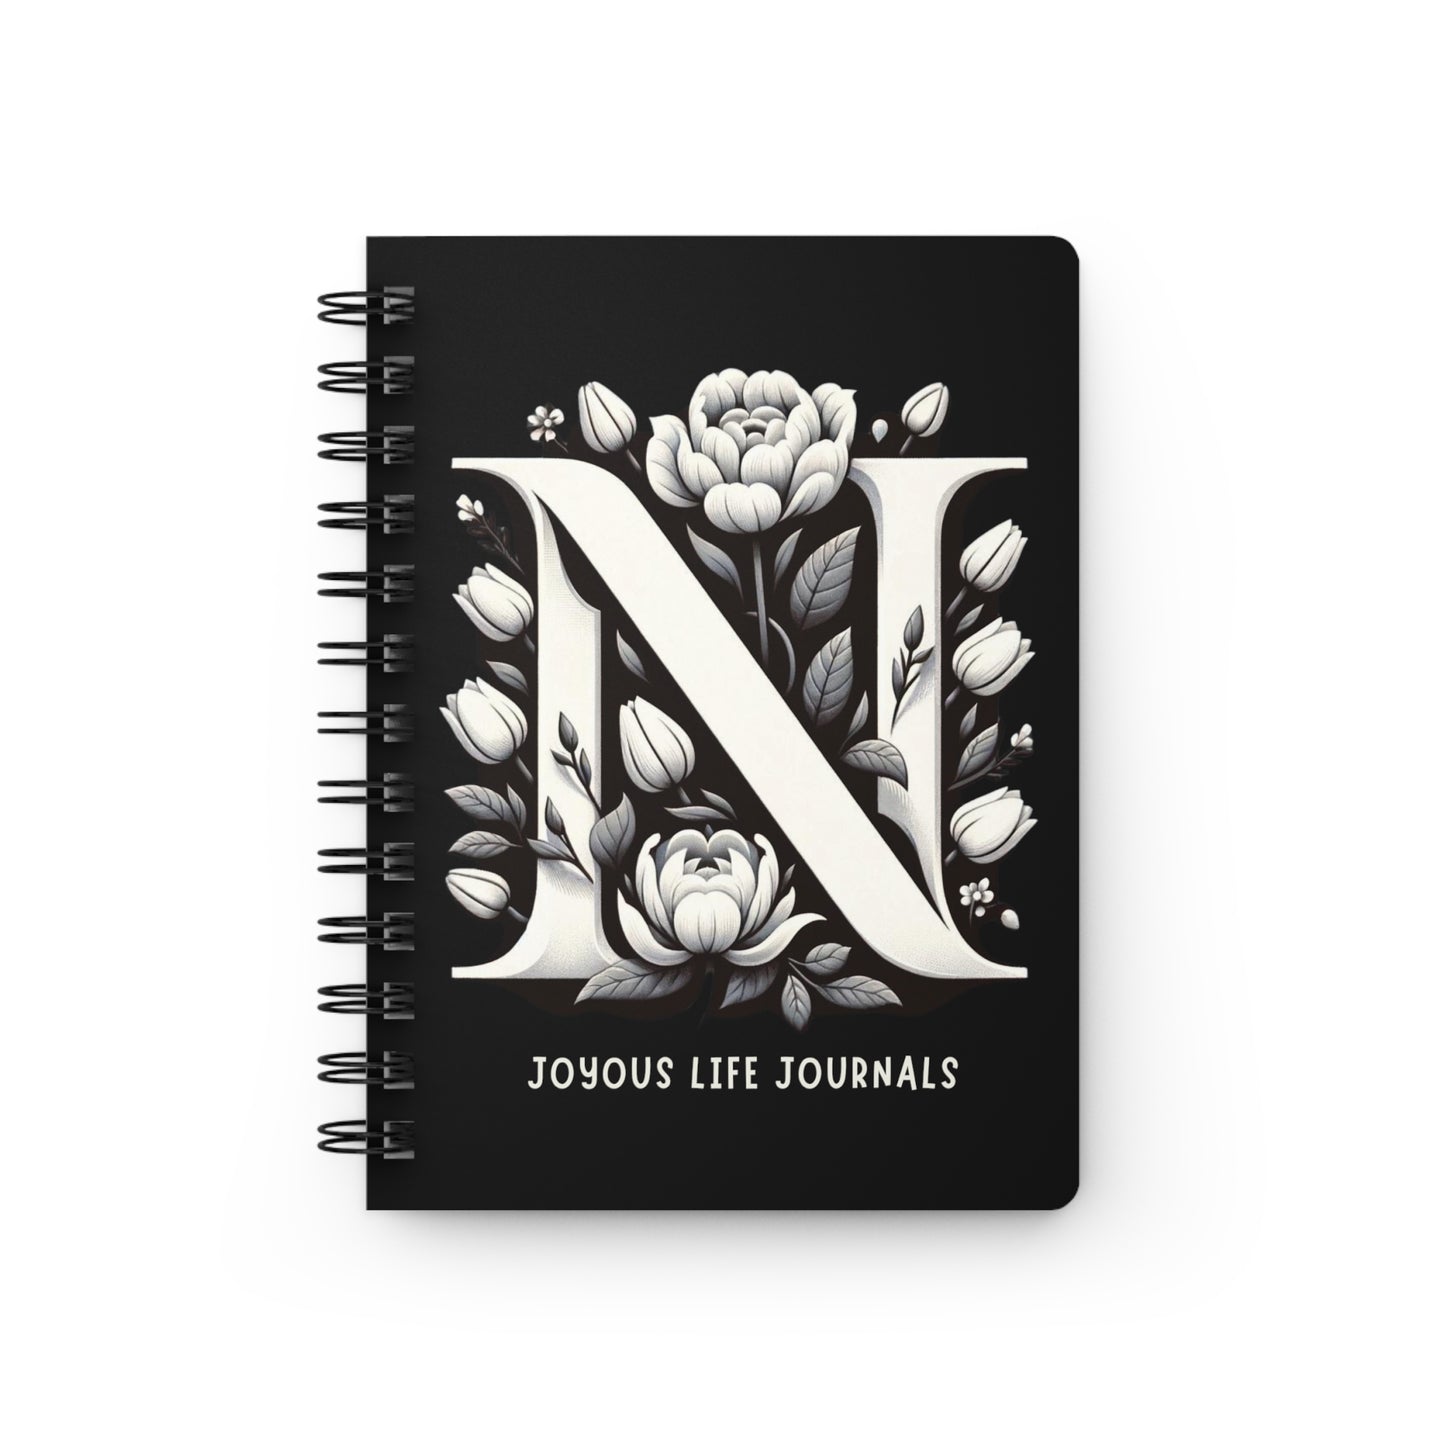 Noble Notations: The 'N' Monogram Journal, Joyous Life Journals